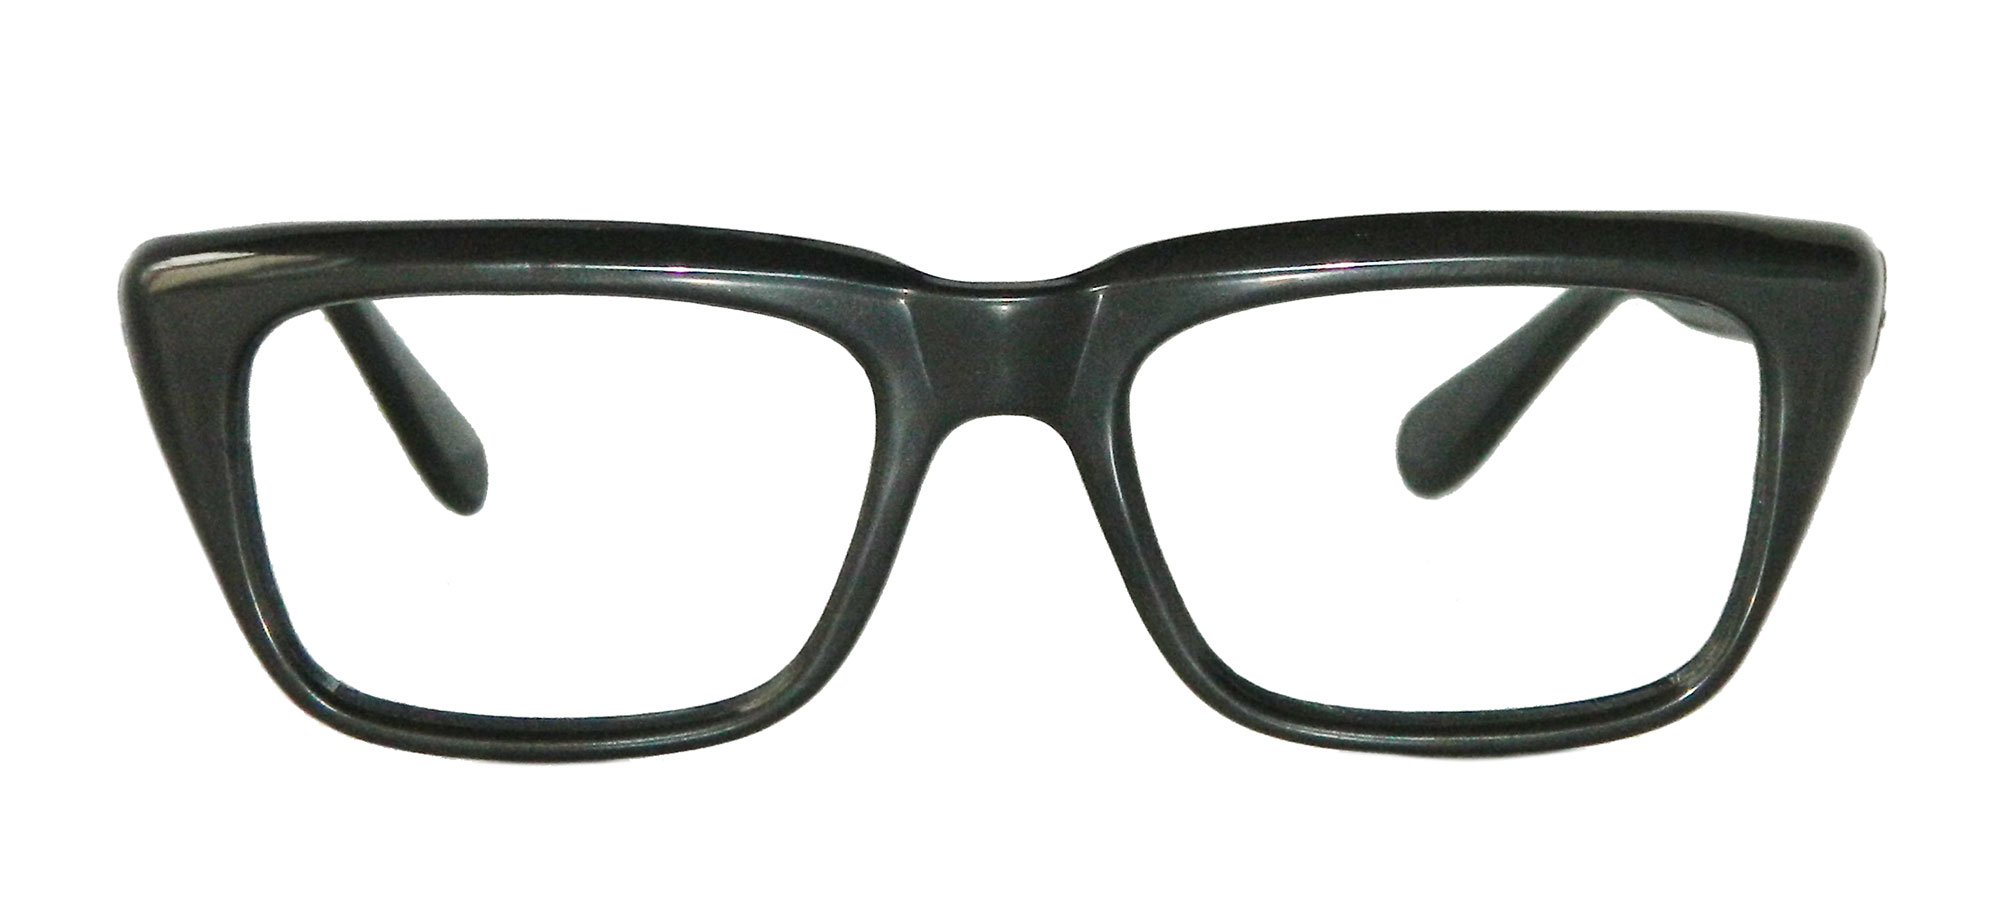 men's vintage eyeglasses